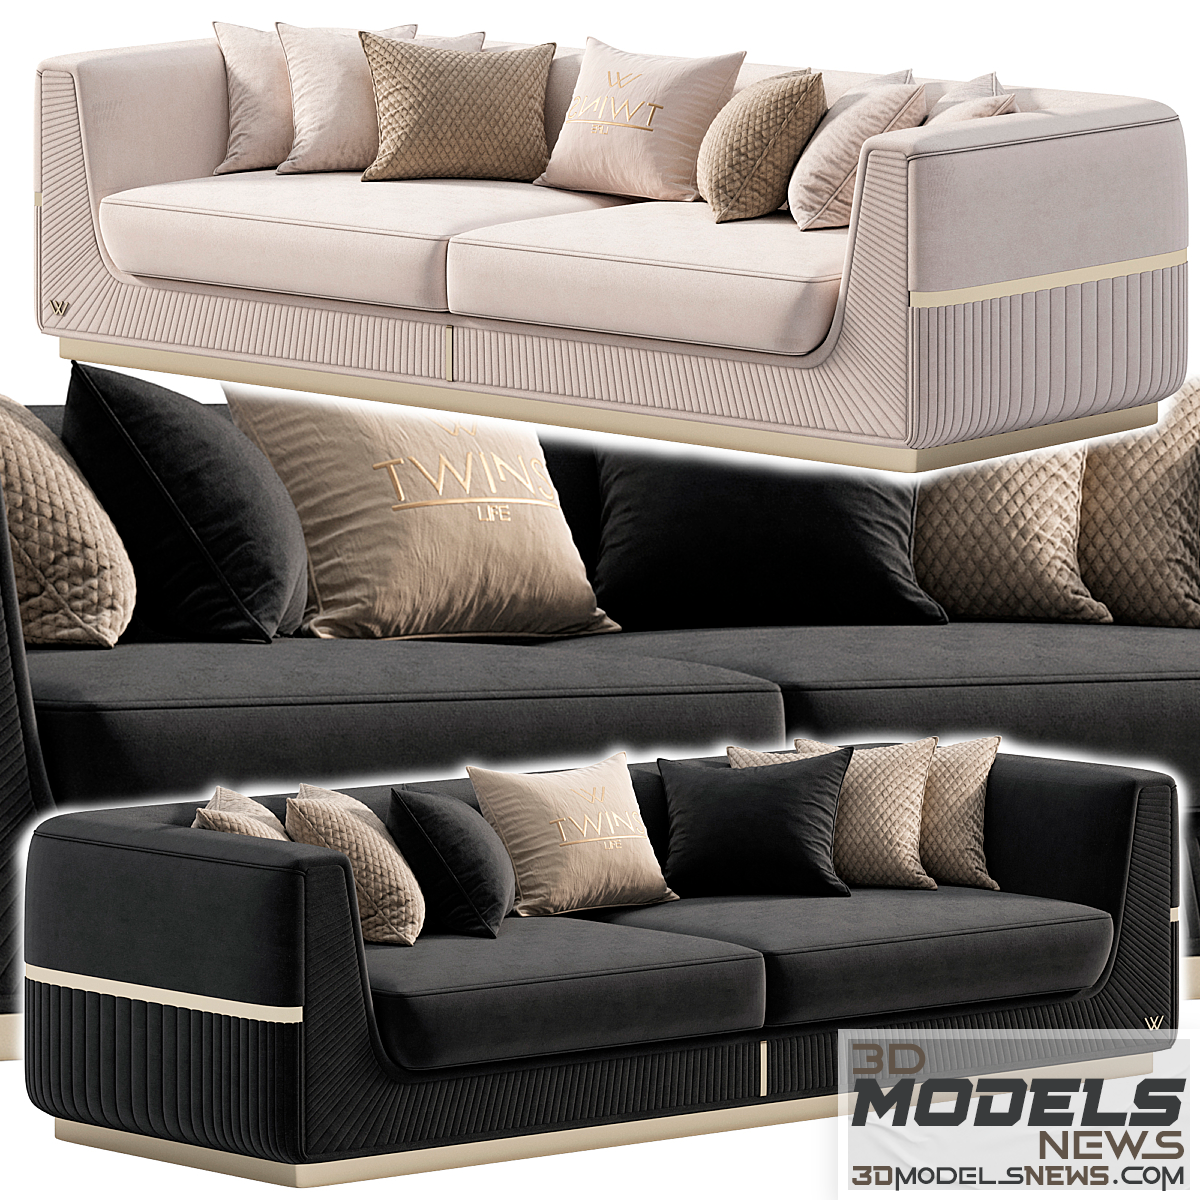 Lorenzo sofa model by twins 2